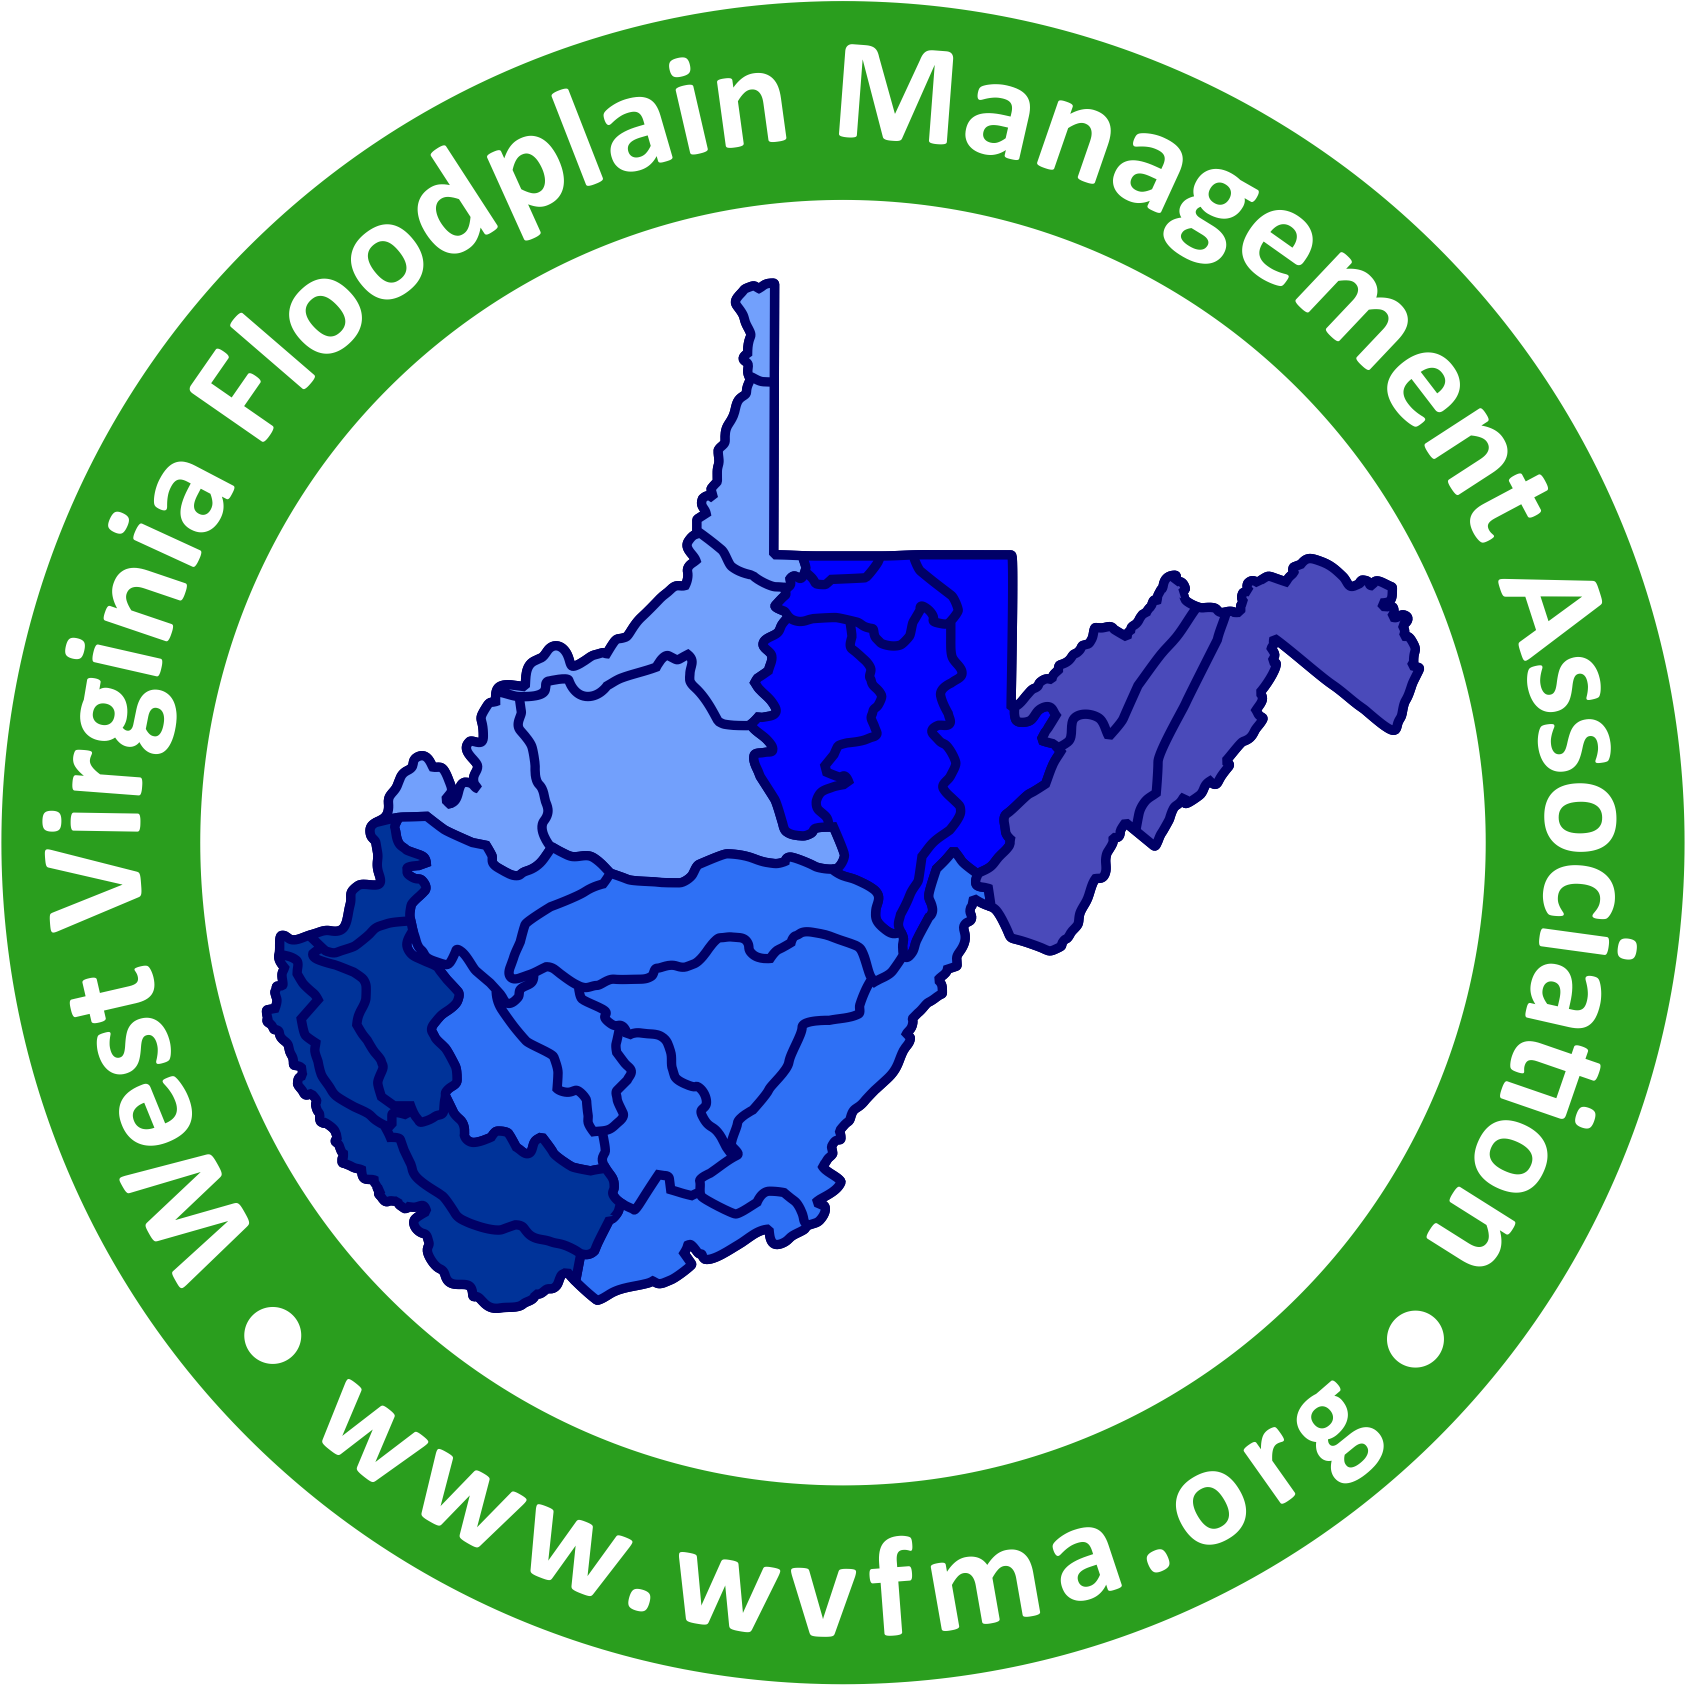 The West Virginia Floodplain Management Association - Barani Institute Of Management Sciences (1801x1801)